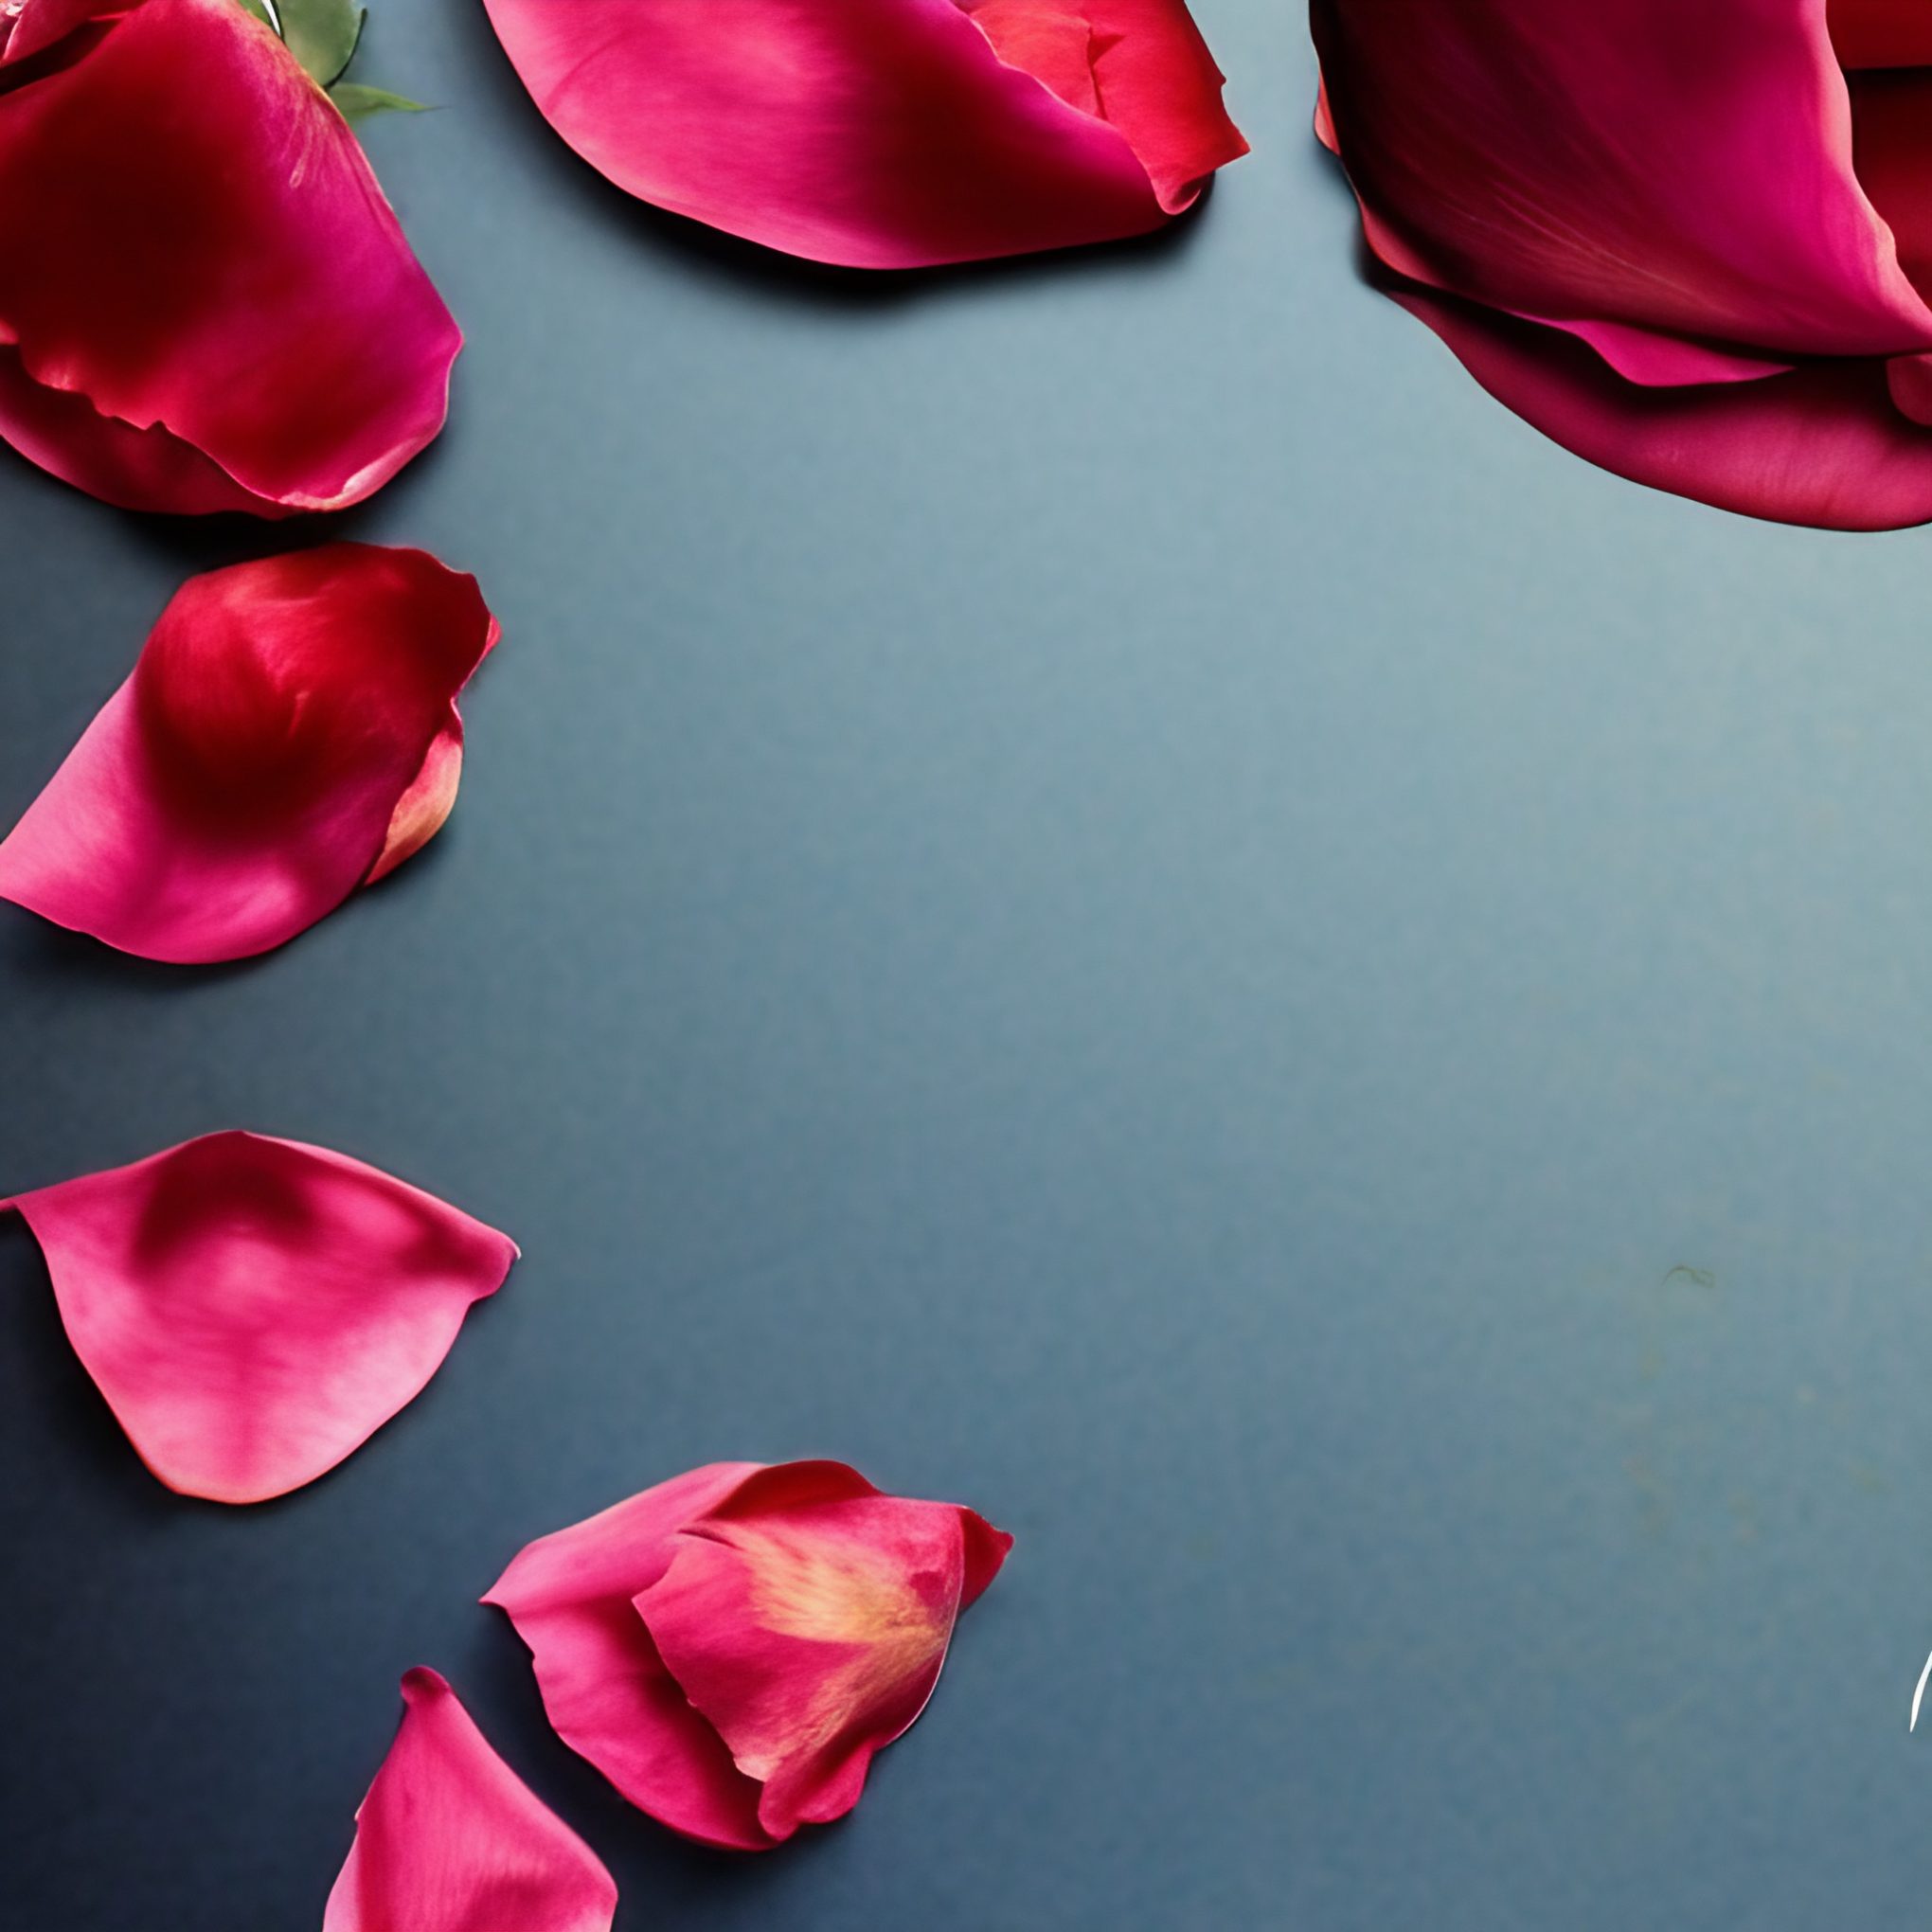 Rose Petals Free Stock Photo Download